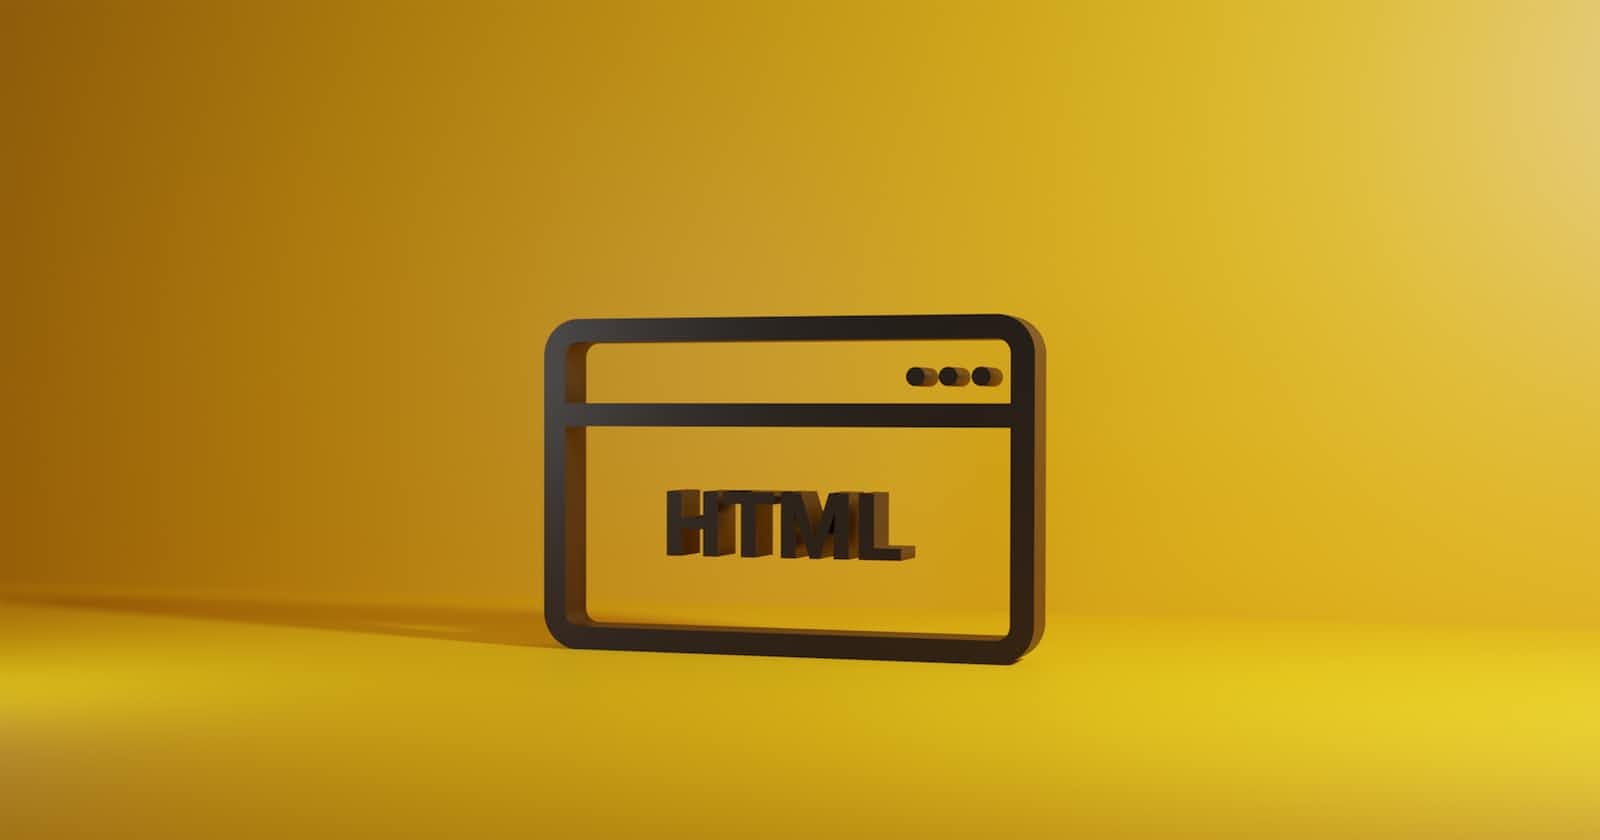 Html(on the web server)